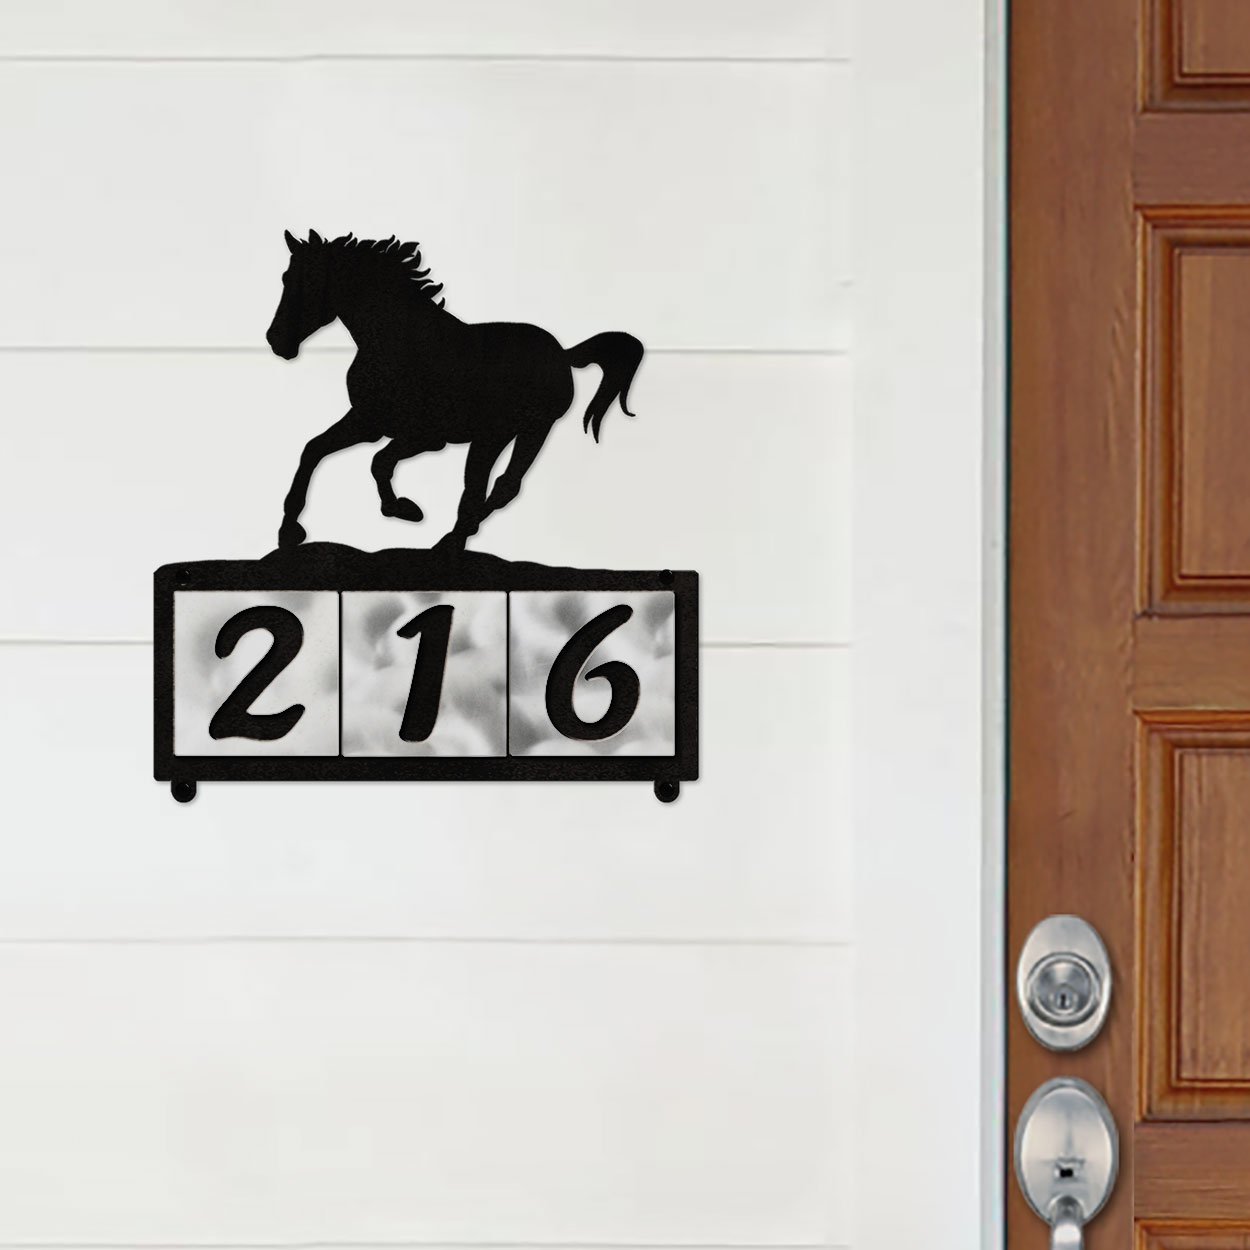 609103 - XL Running Horse Scene Design 3-Digit Horizontal 6in Tile Outdoor House Numbers